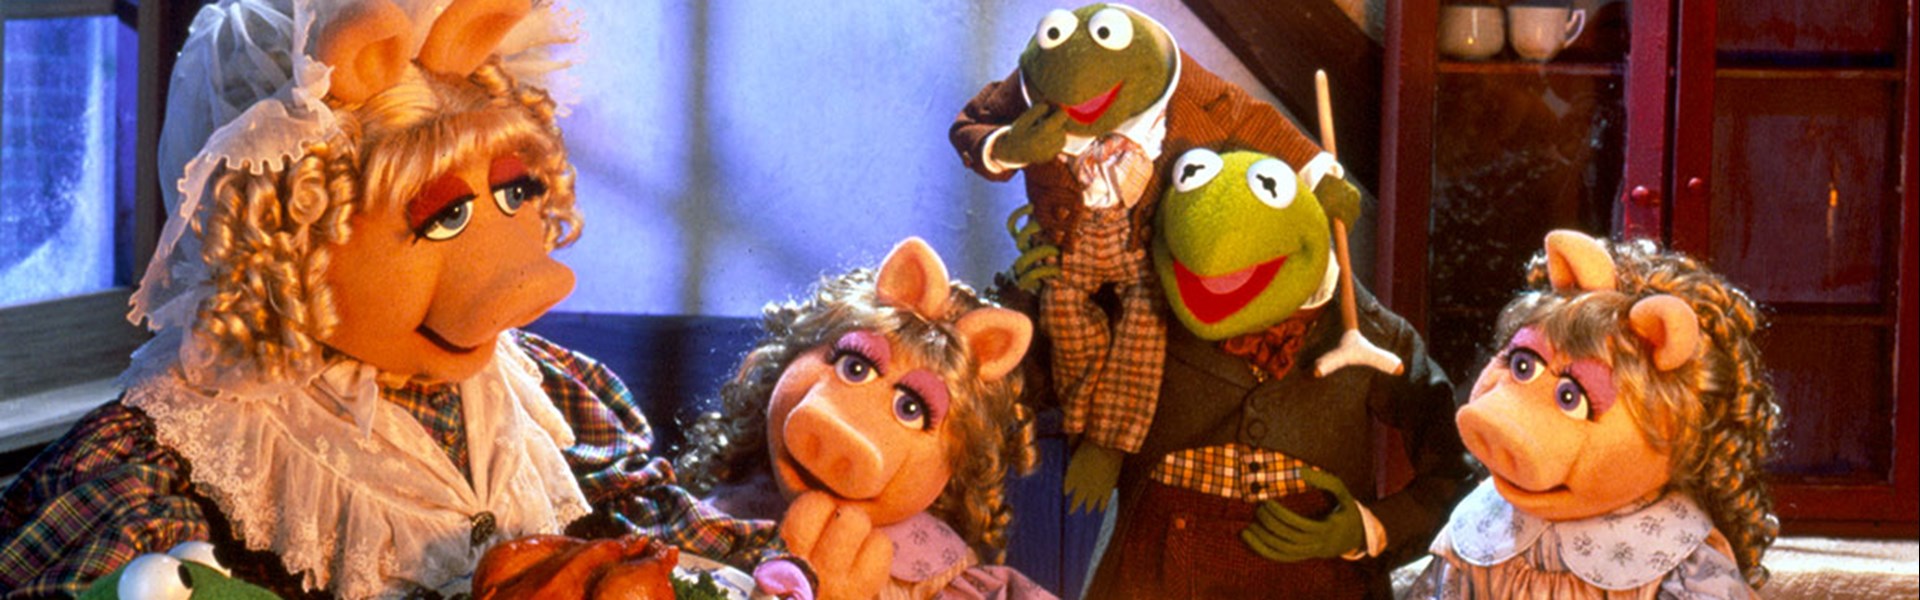 FILM: The Muppets Christmas Carol (U)